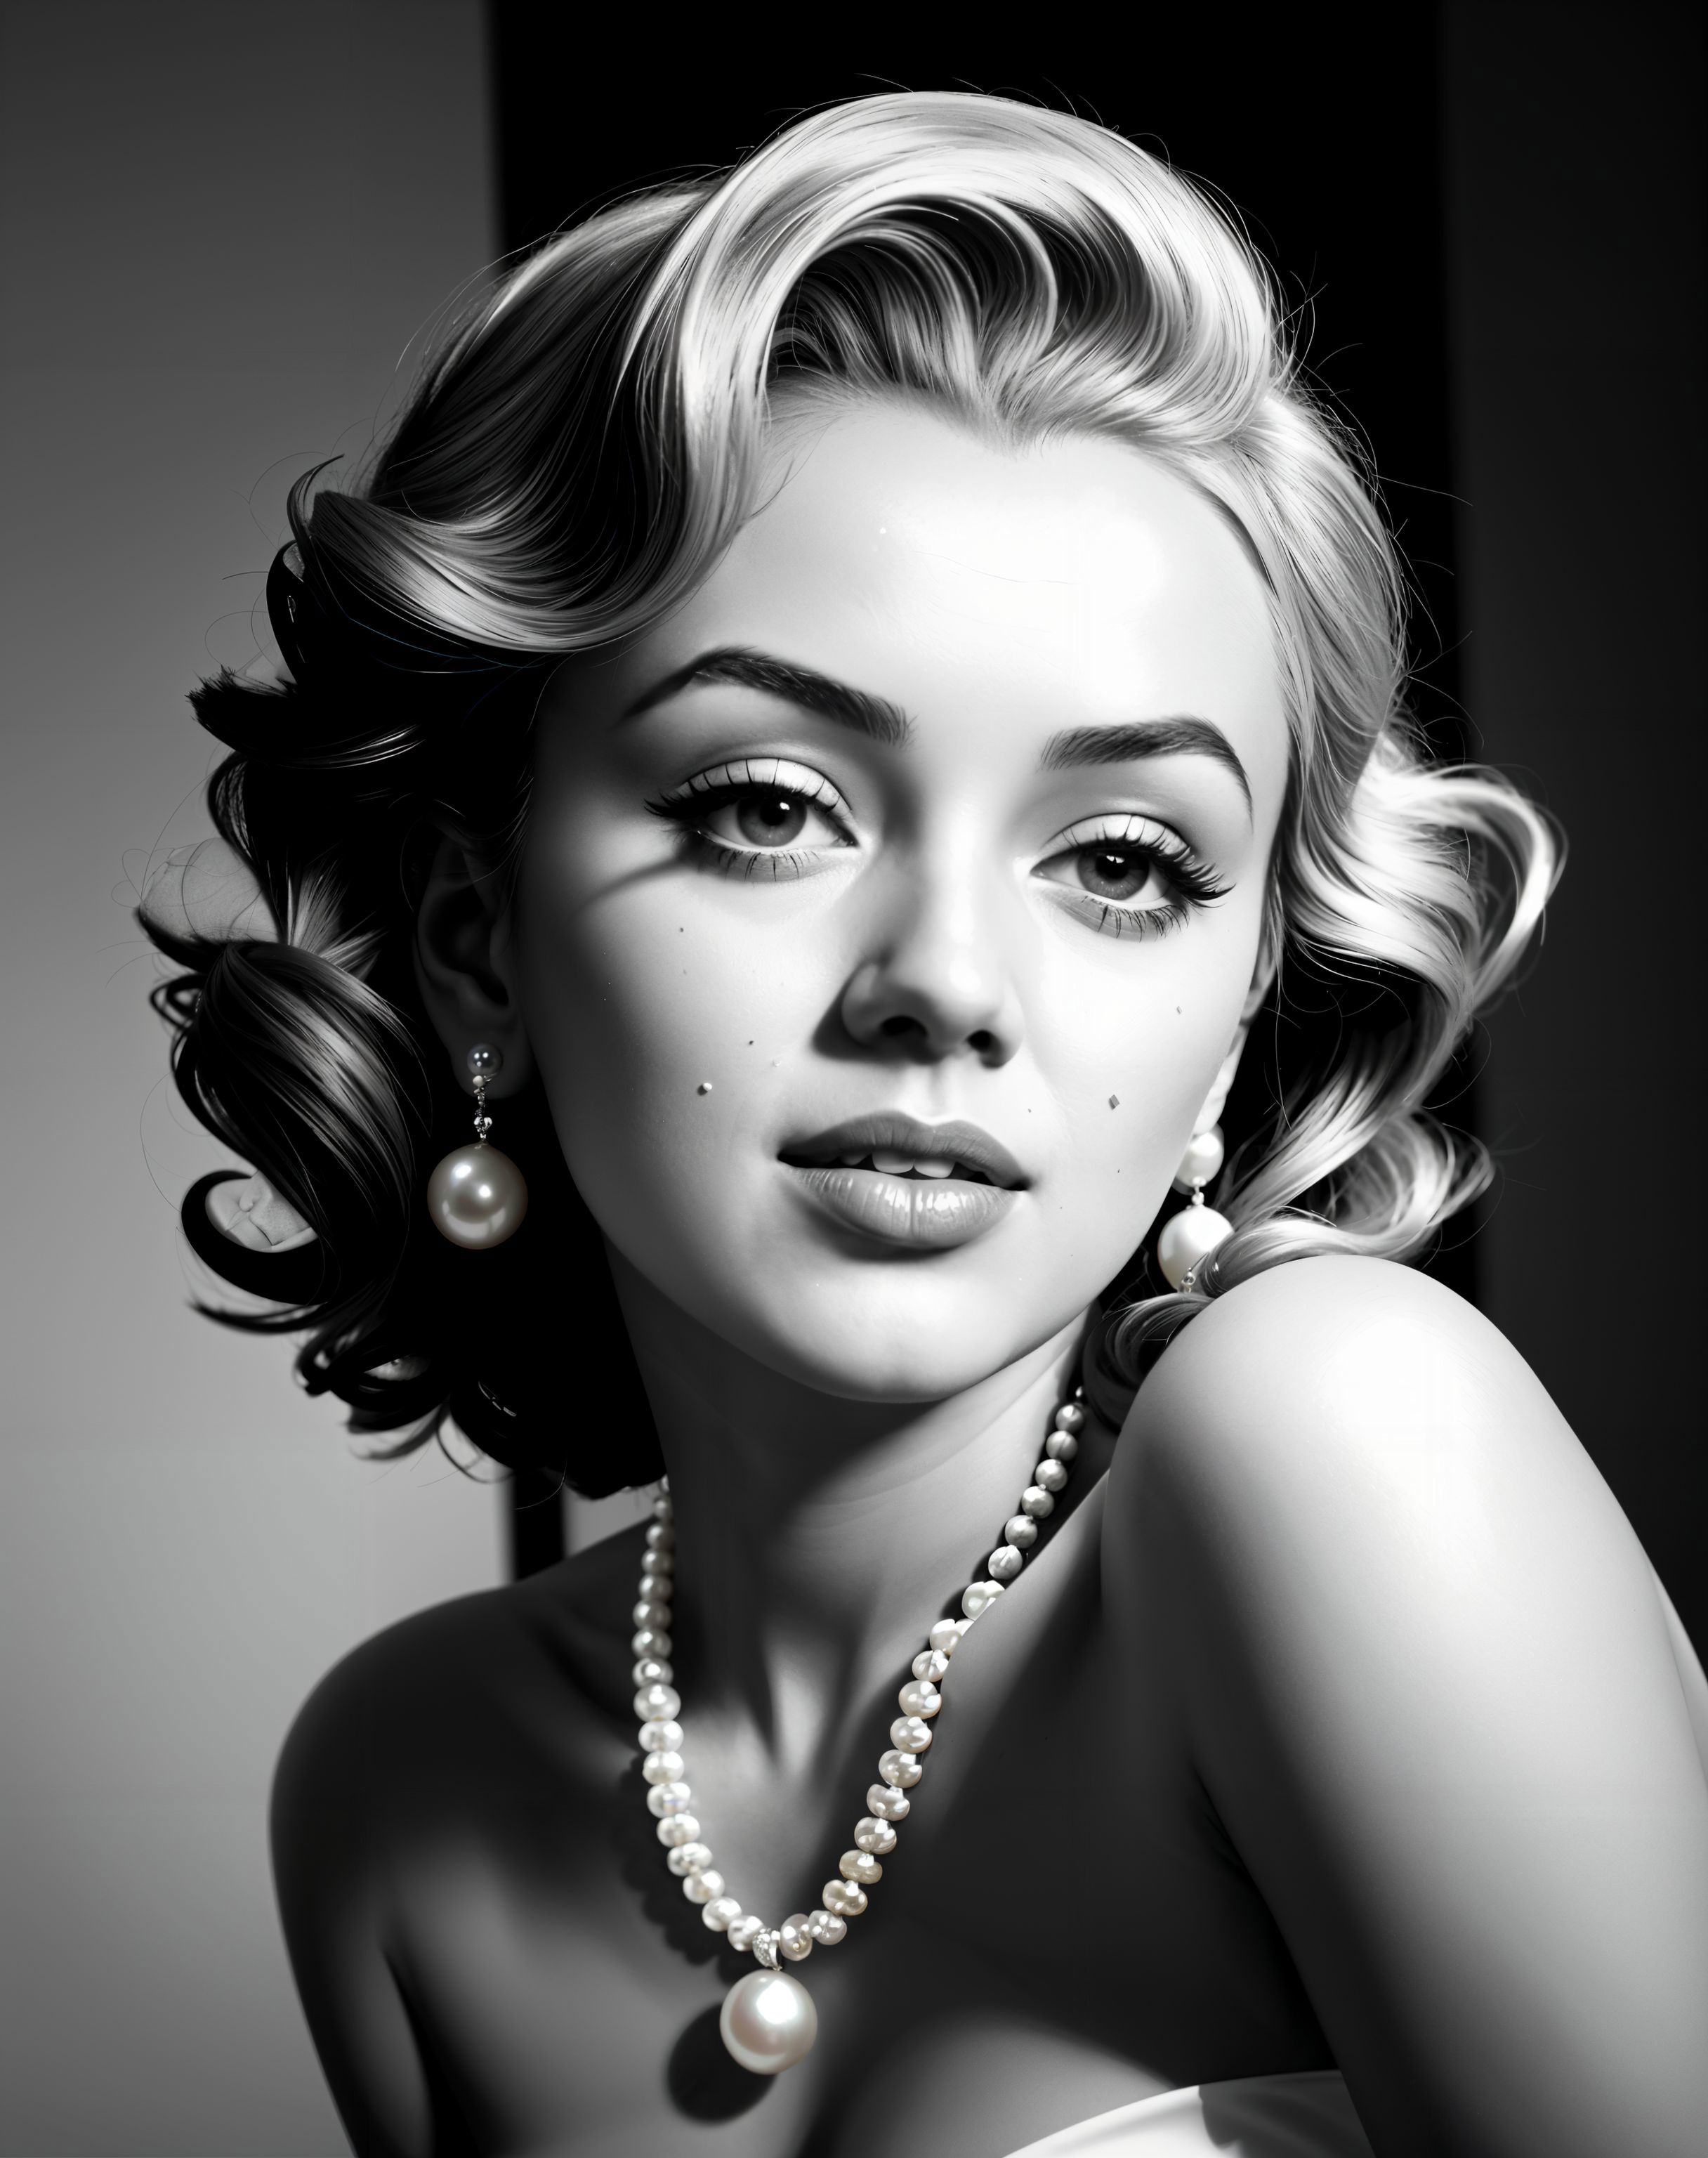 Marilyn Monroe image by Crash67